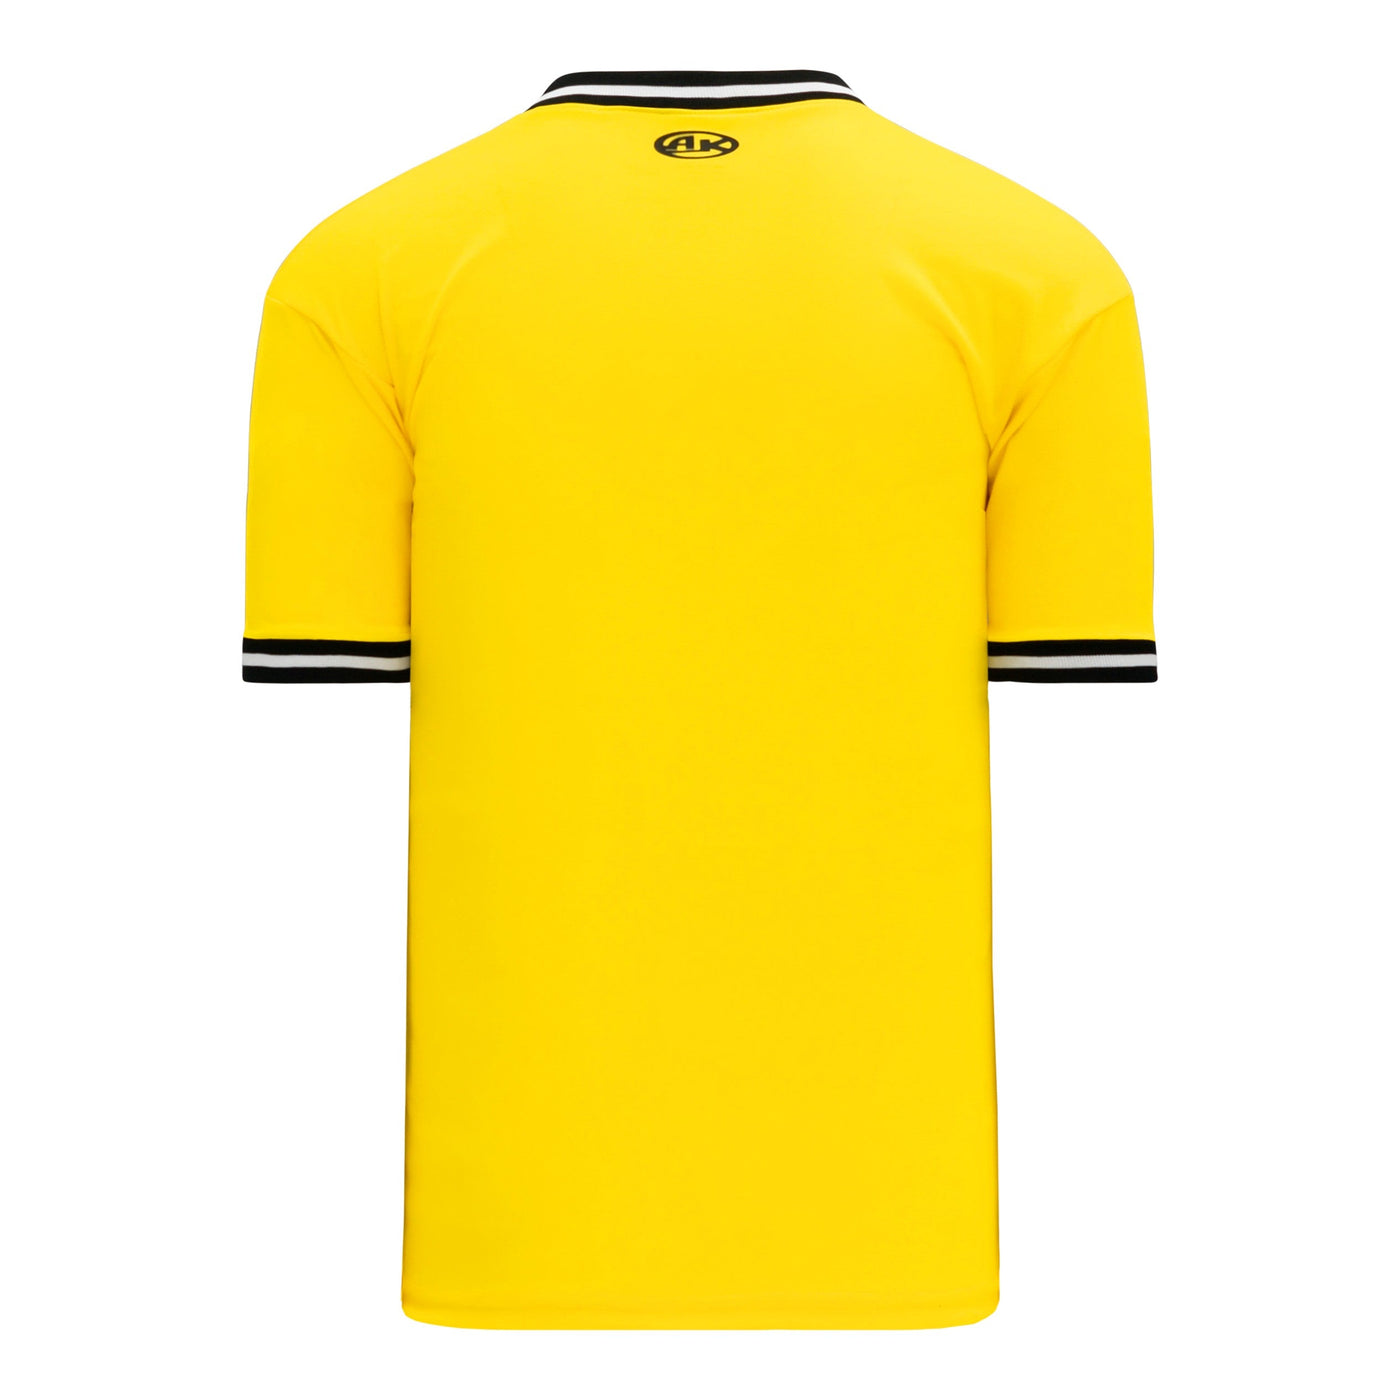 Retro V-Neck Dry Flex Pullover Yellow-Black Jersey